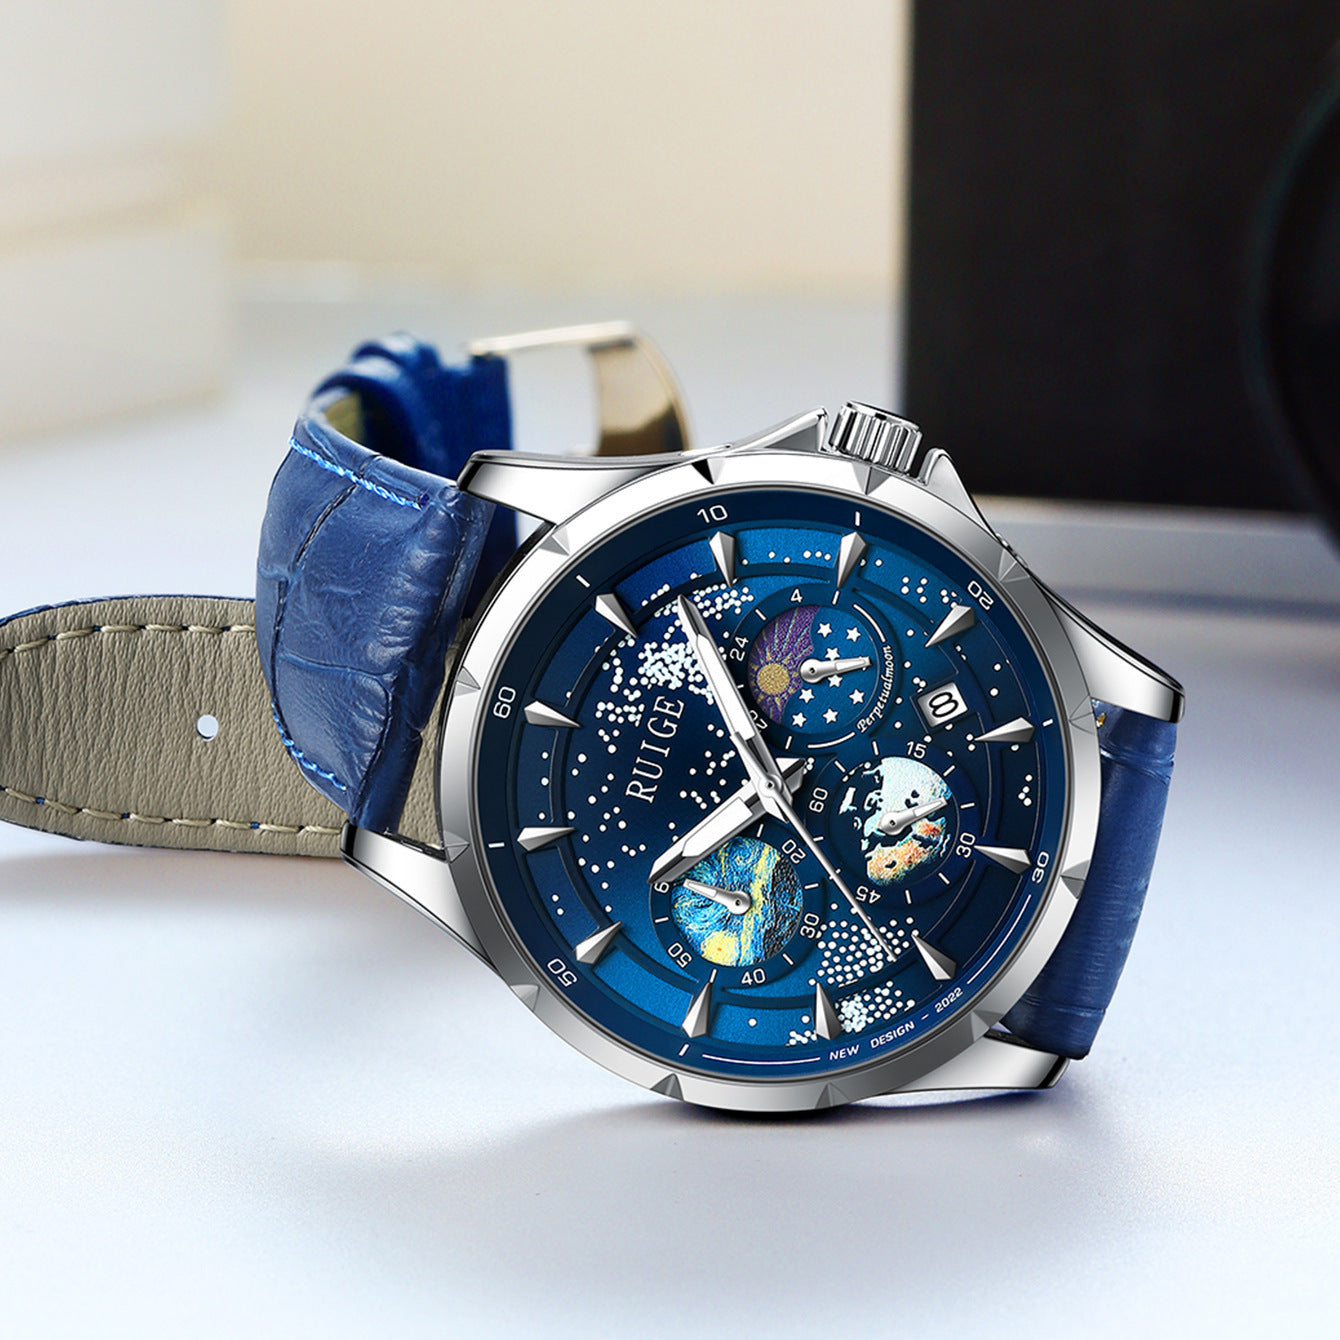 Men's 'Star Sea' Quartz Watch, Multifunction, Luminous, Waterproof